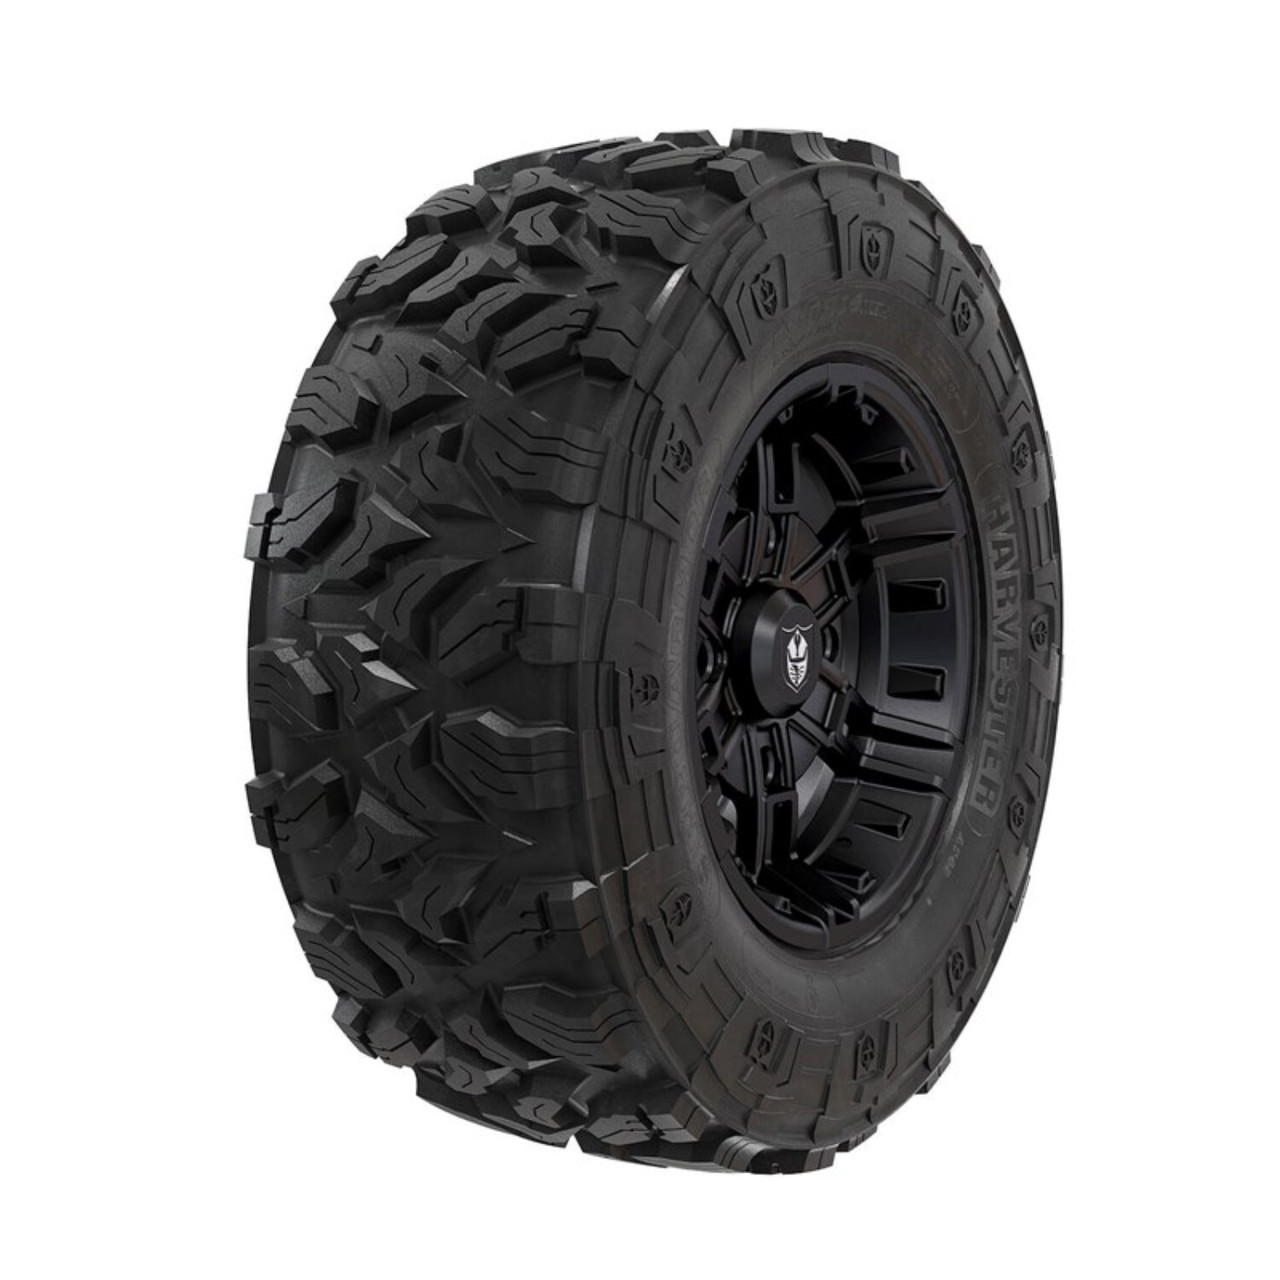 Polaris New OEM Pro Armor® Wheel & Tire Set: Buckle & Harvester, 28R14, 2883221